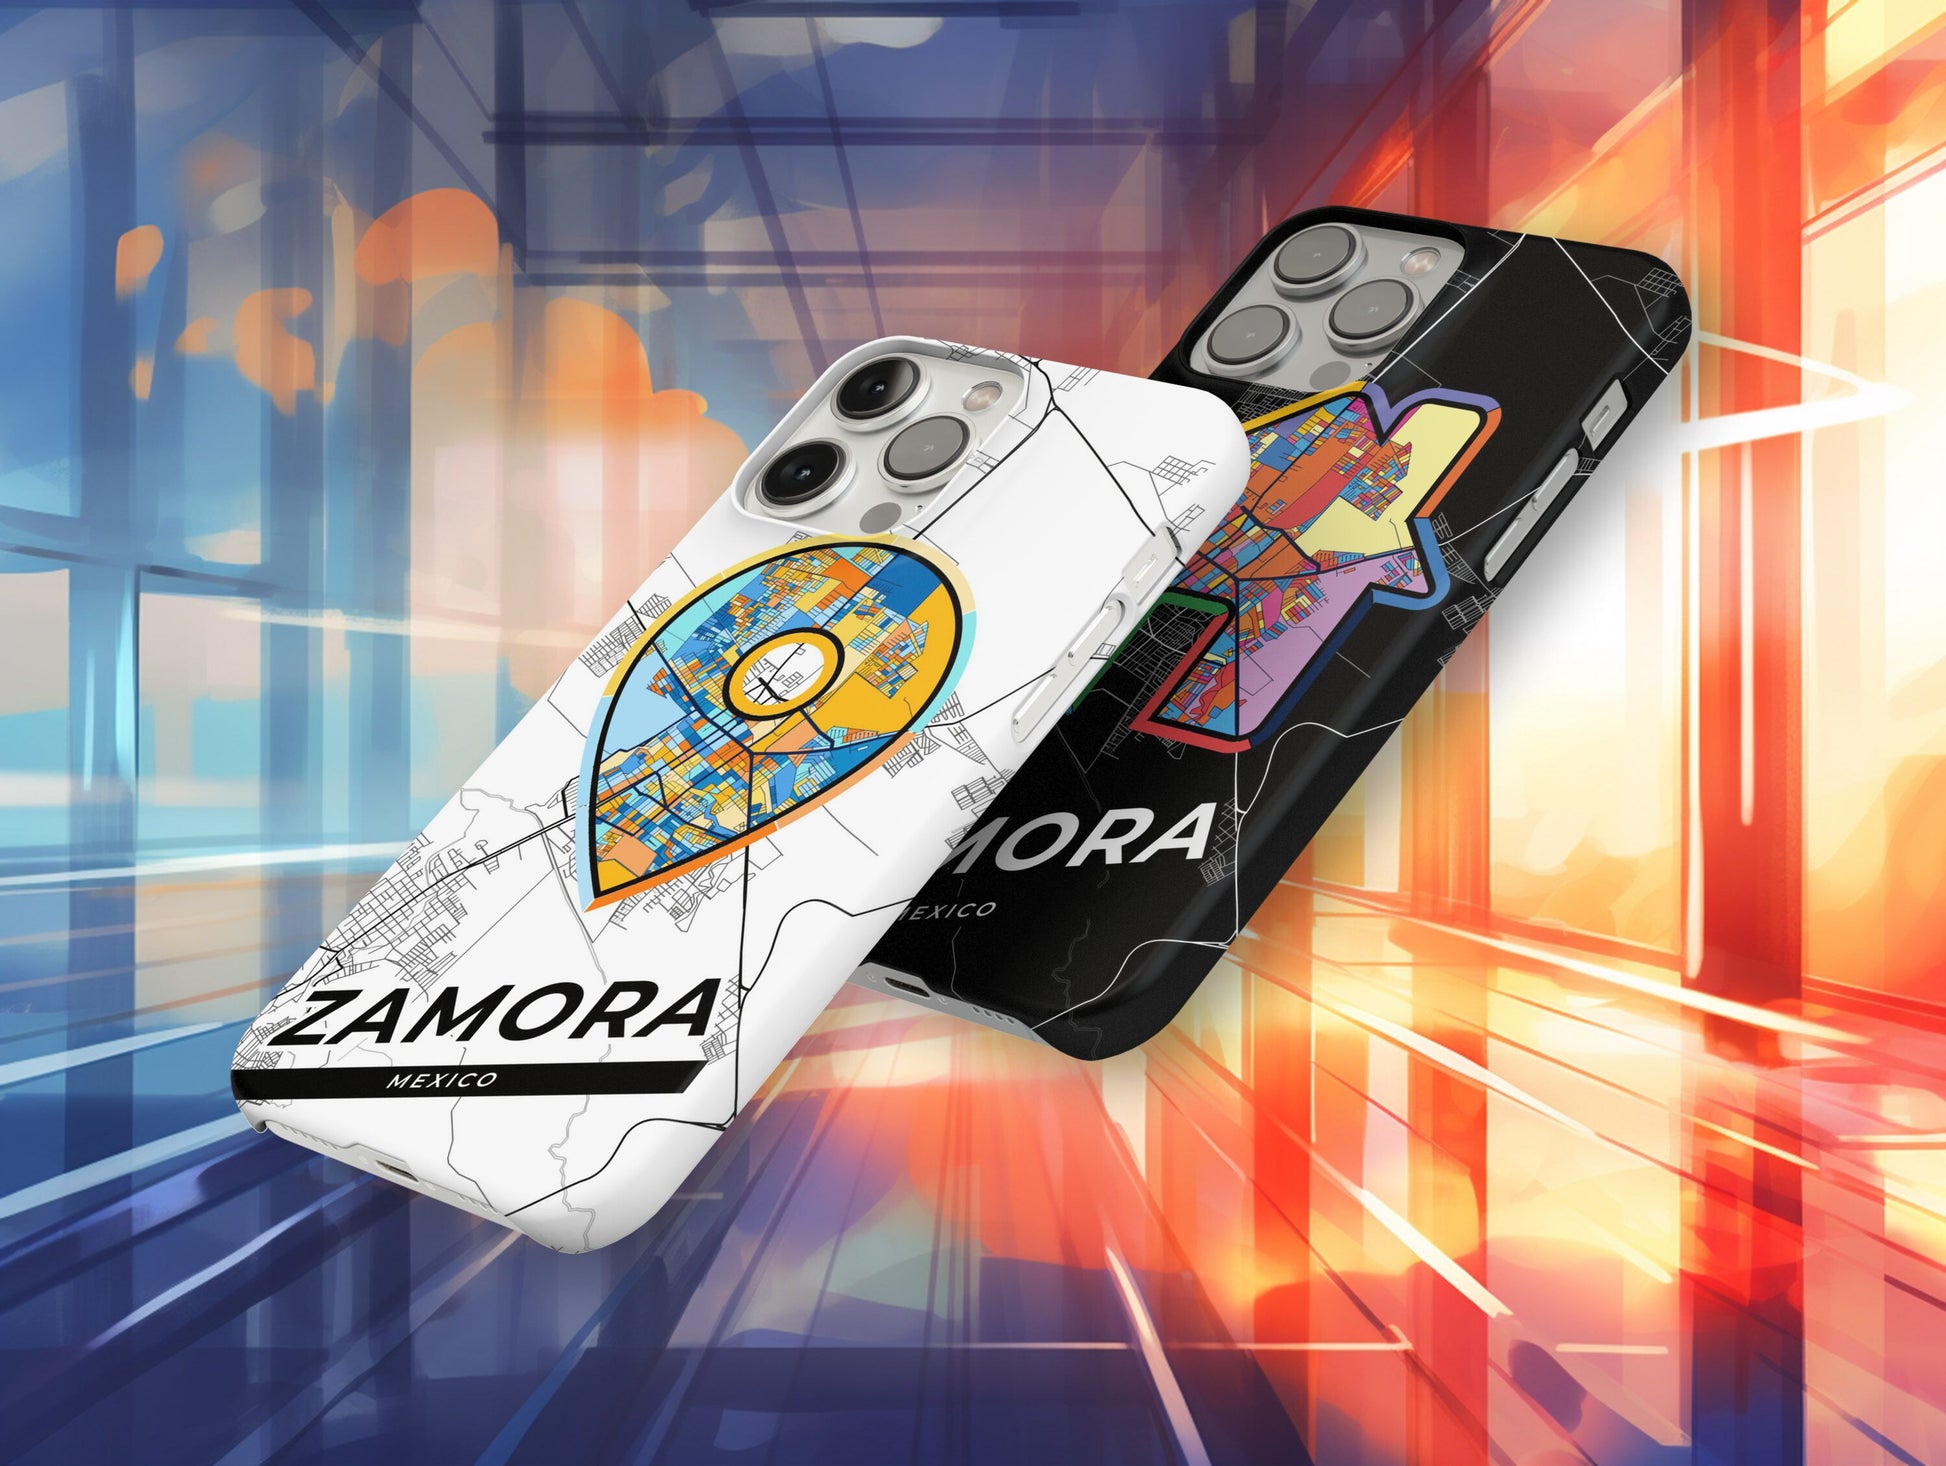 Zamora Mexico slim phone case with colorful icon